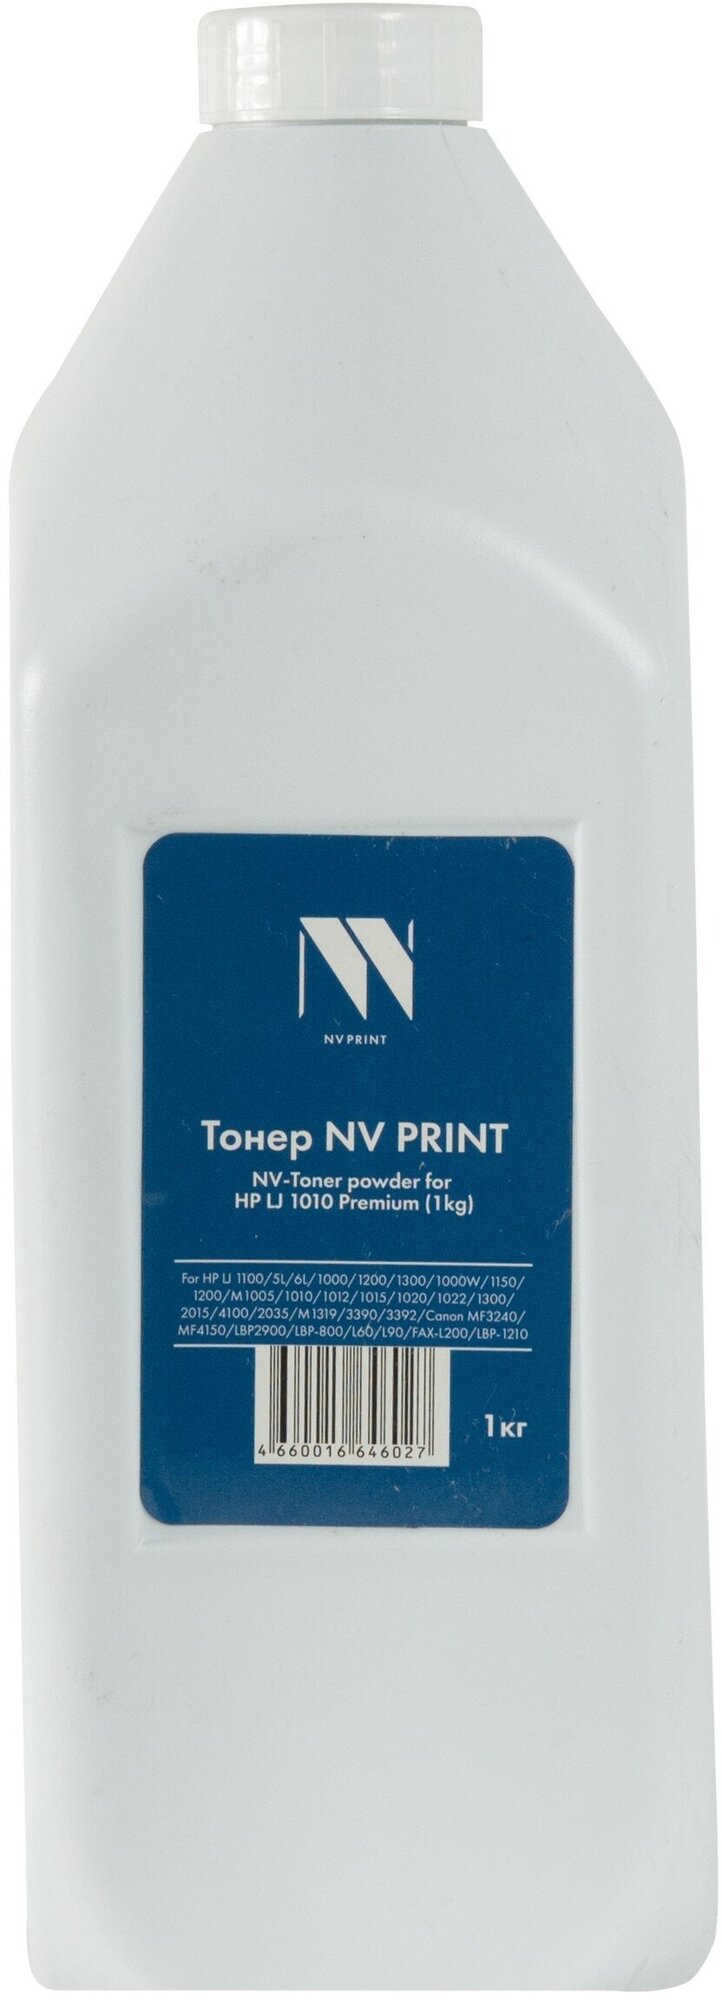 Тонер NV PRINT для HP 1010 Premium (1кг)